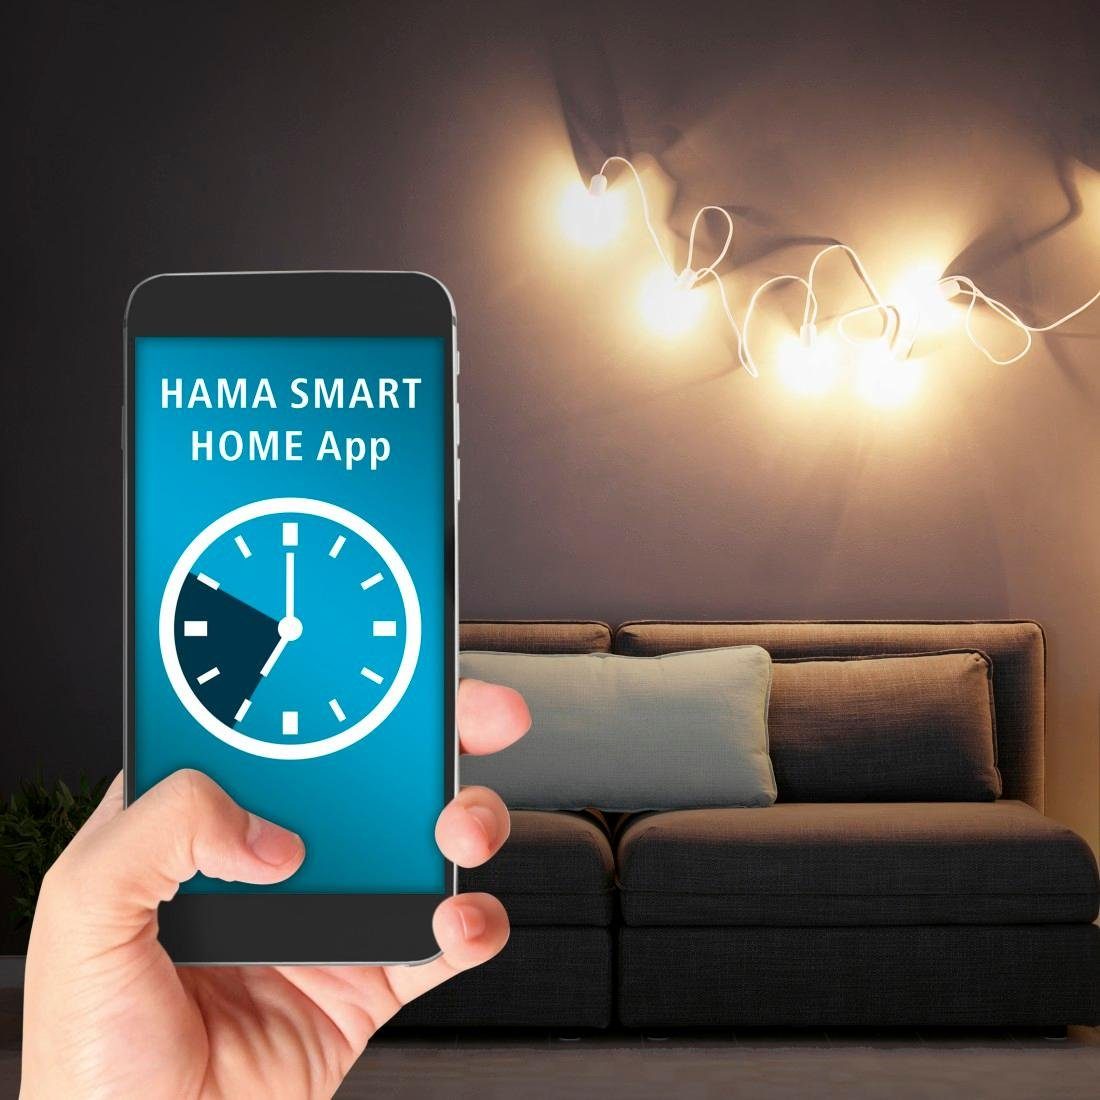 Hama WLAN-Steckdose WLAN Steckdose Mini W, o.Hub App-Sprachsteuerung max. 3.680W, Berührungsschutz, 3680 Mit erhöhtem Verbrauchsmesser Verbrauchsmesser